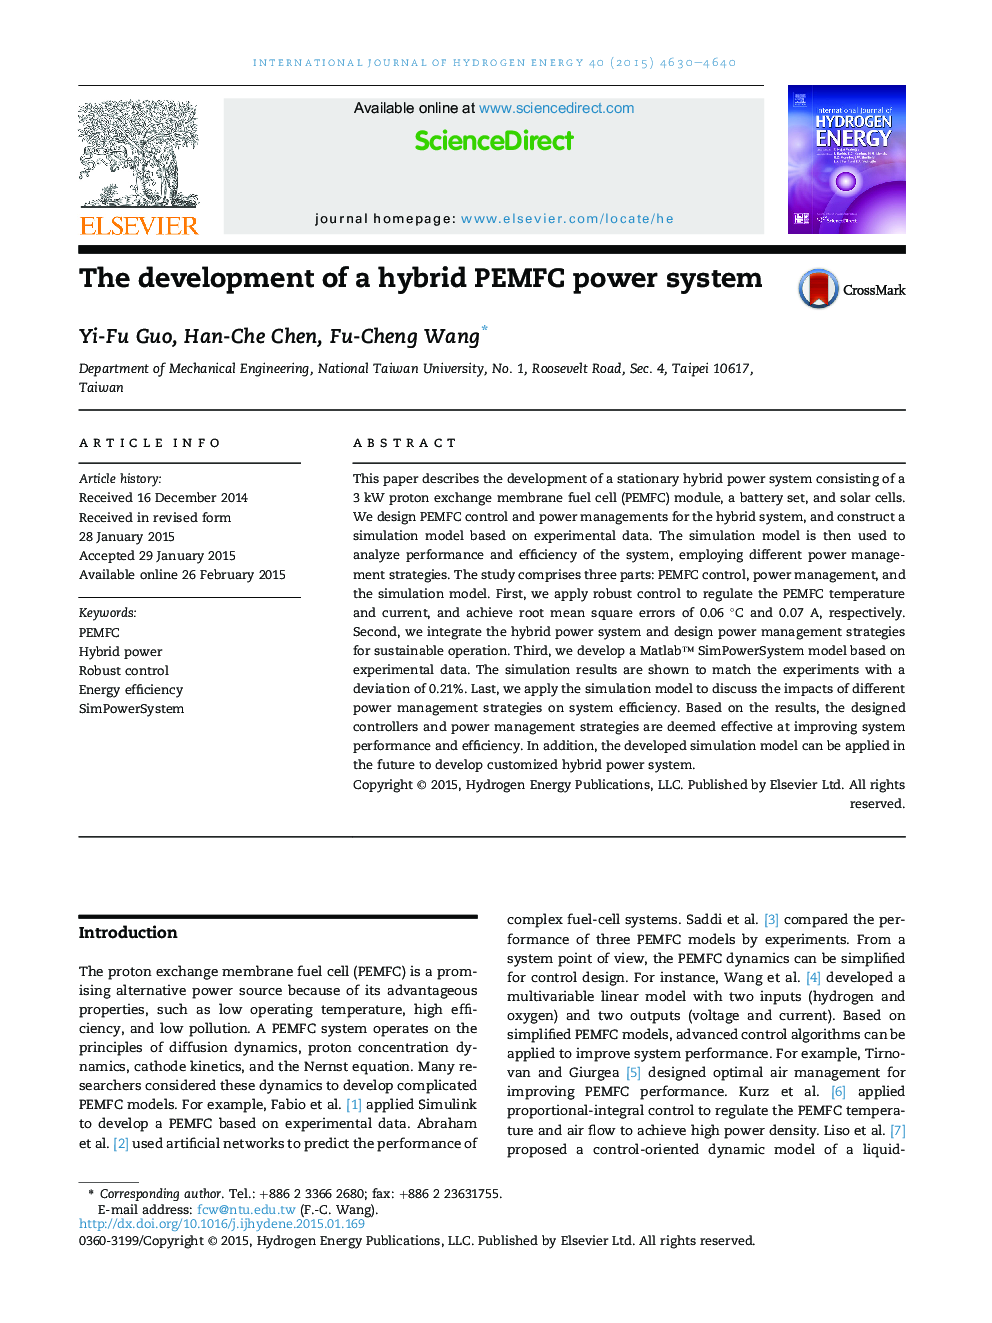 The development of a hybrid PEMFC power system